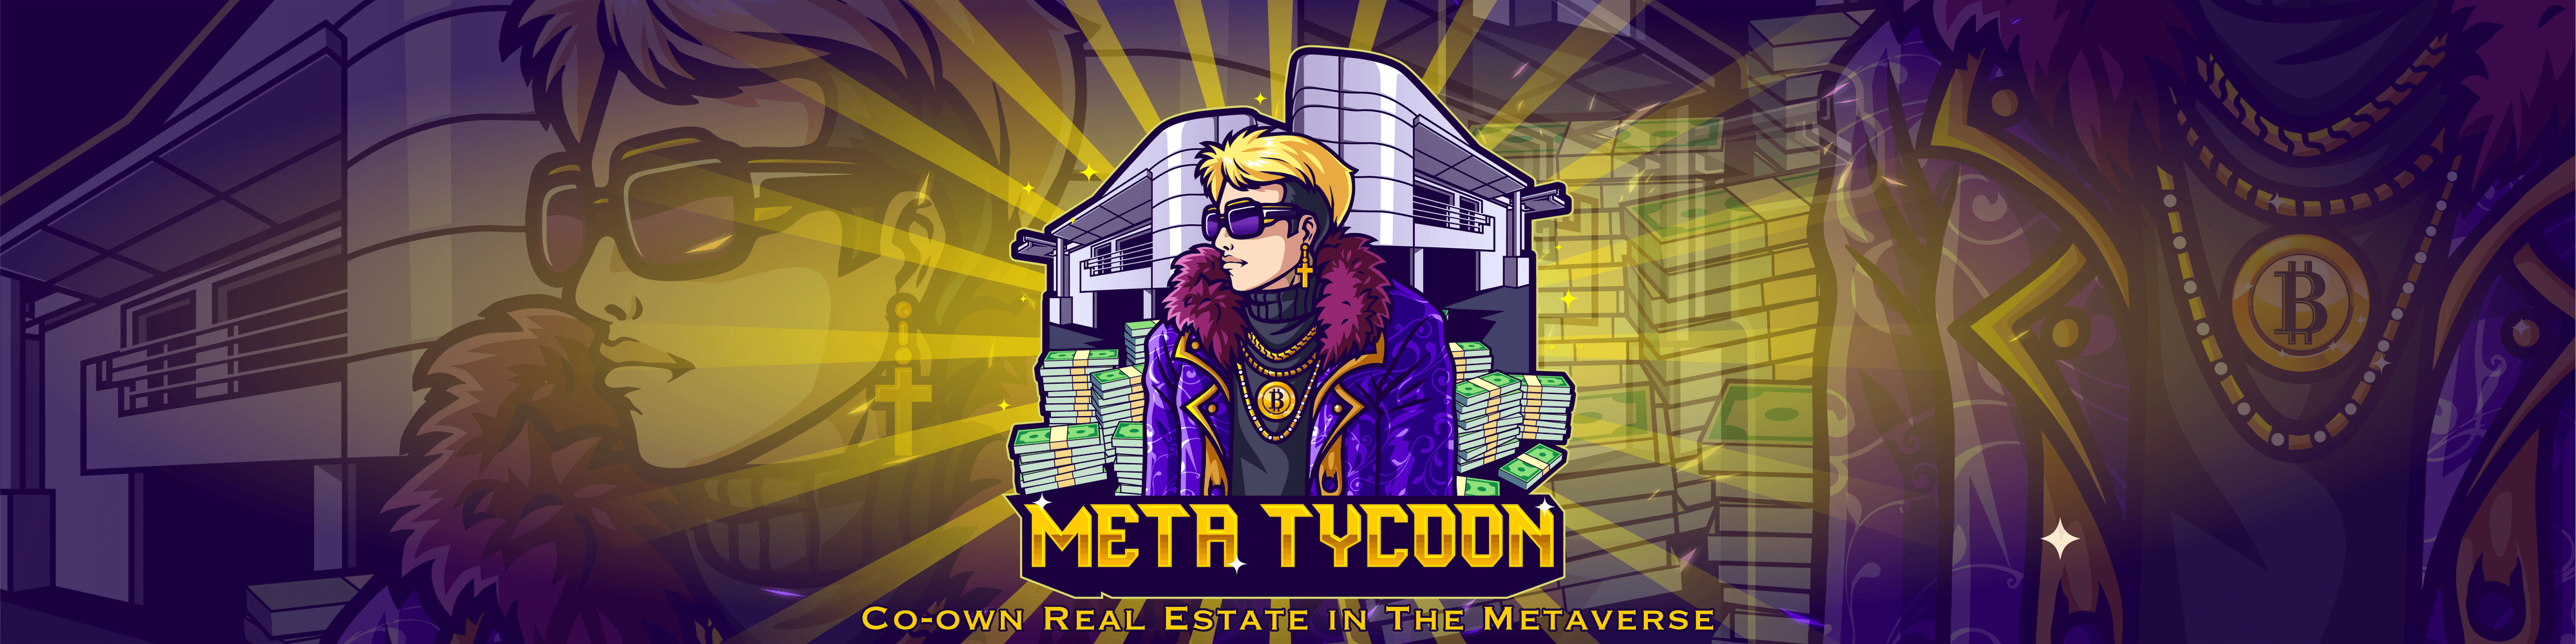 MetaTycoon banner